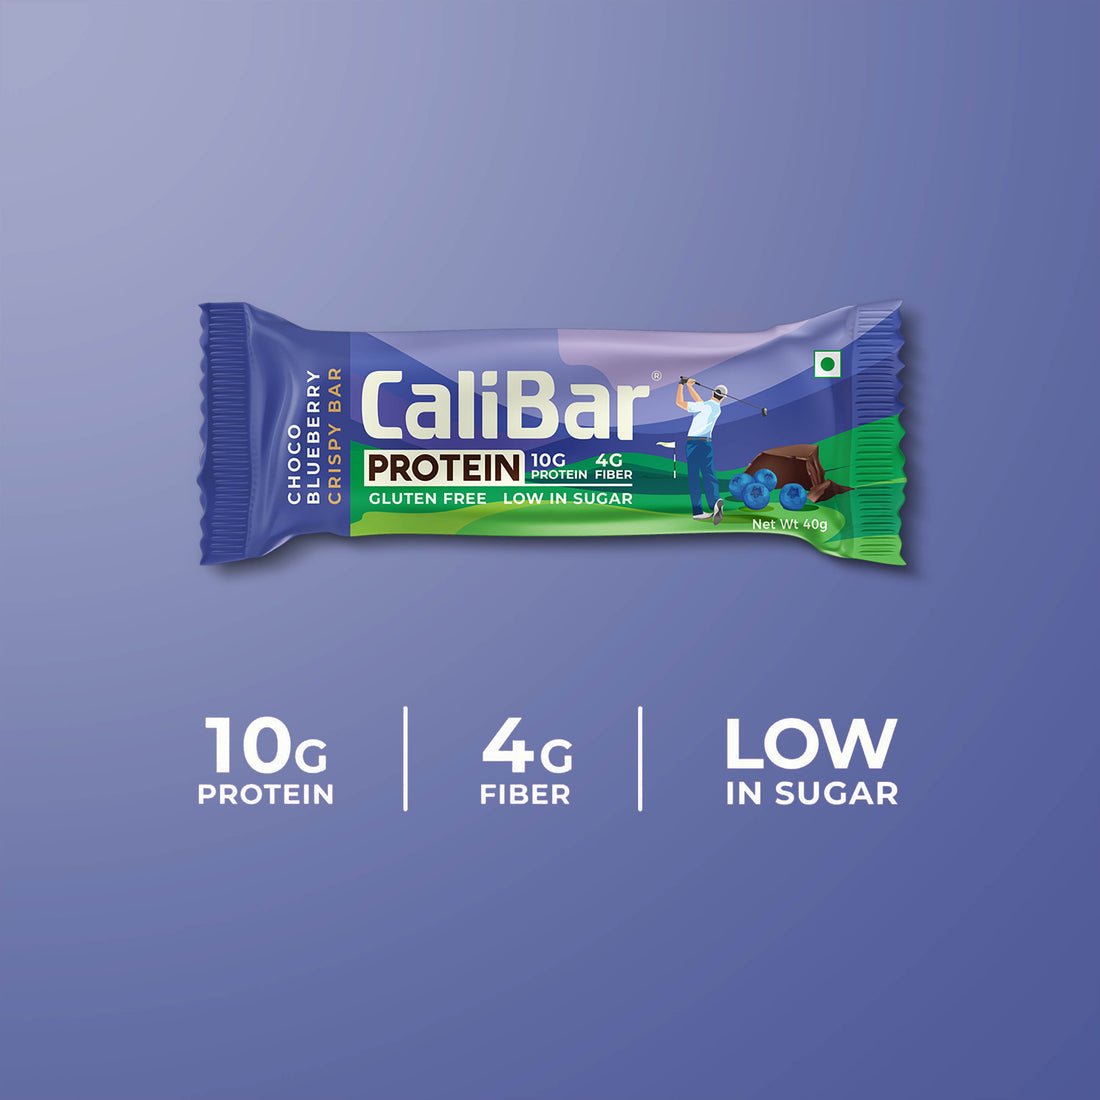 CaliBar 10g Protein Bar - Choco Blueberry Crispy Bar (Pack of 6)